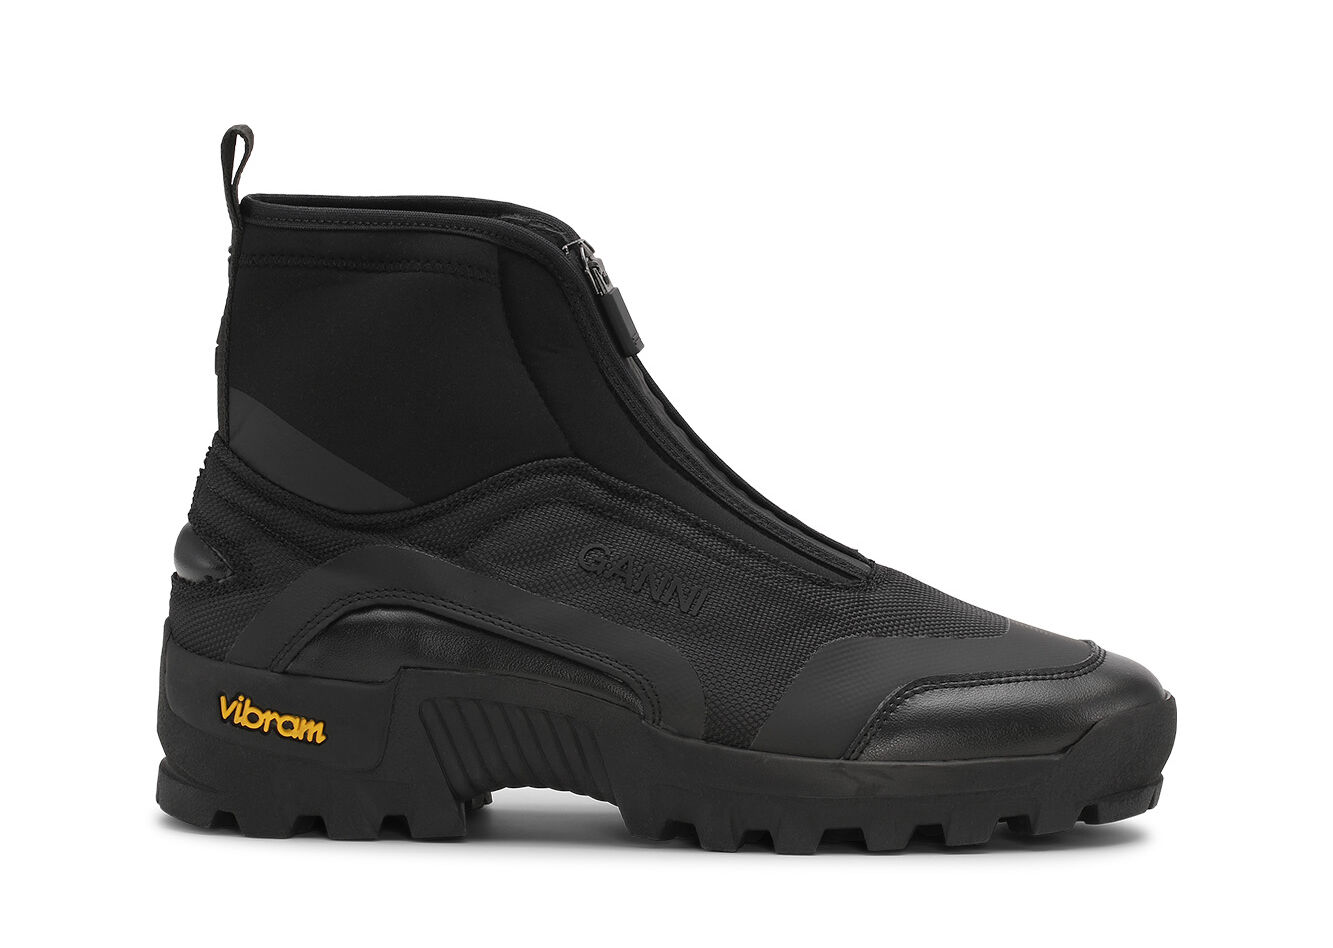 Black Performance High Top Zip Sneakers, in colour Black - 1 - GANNI